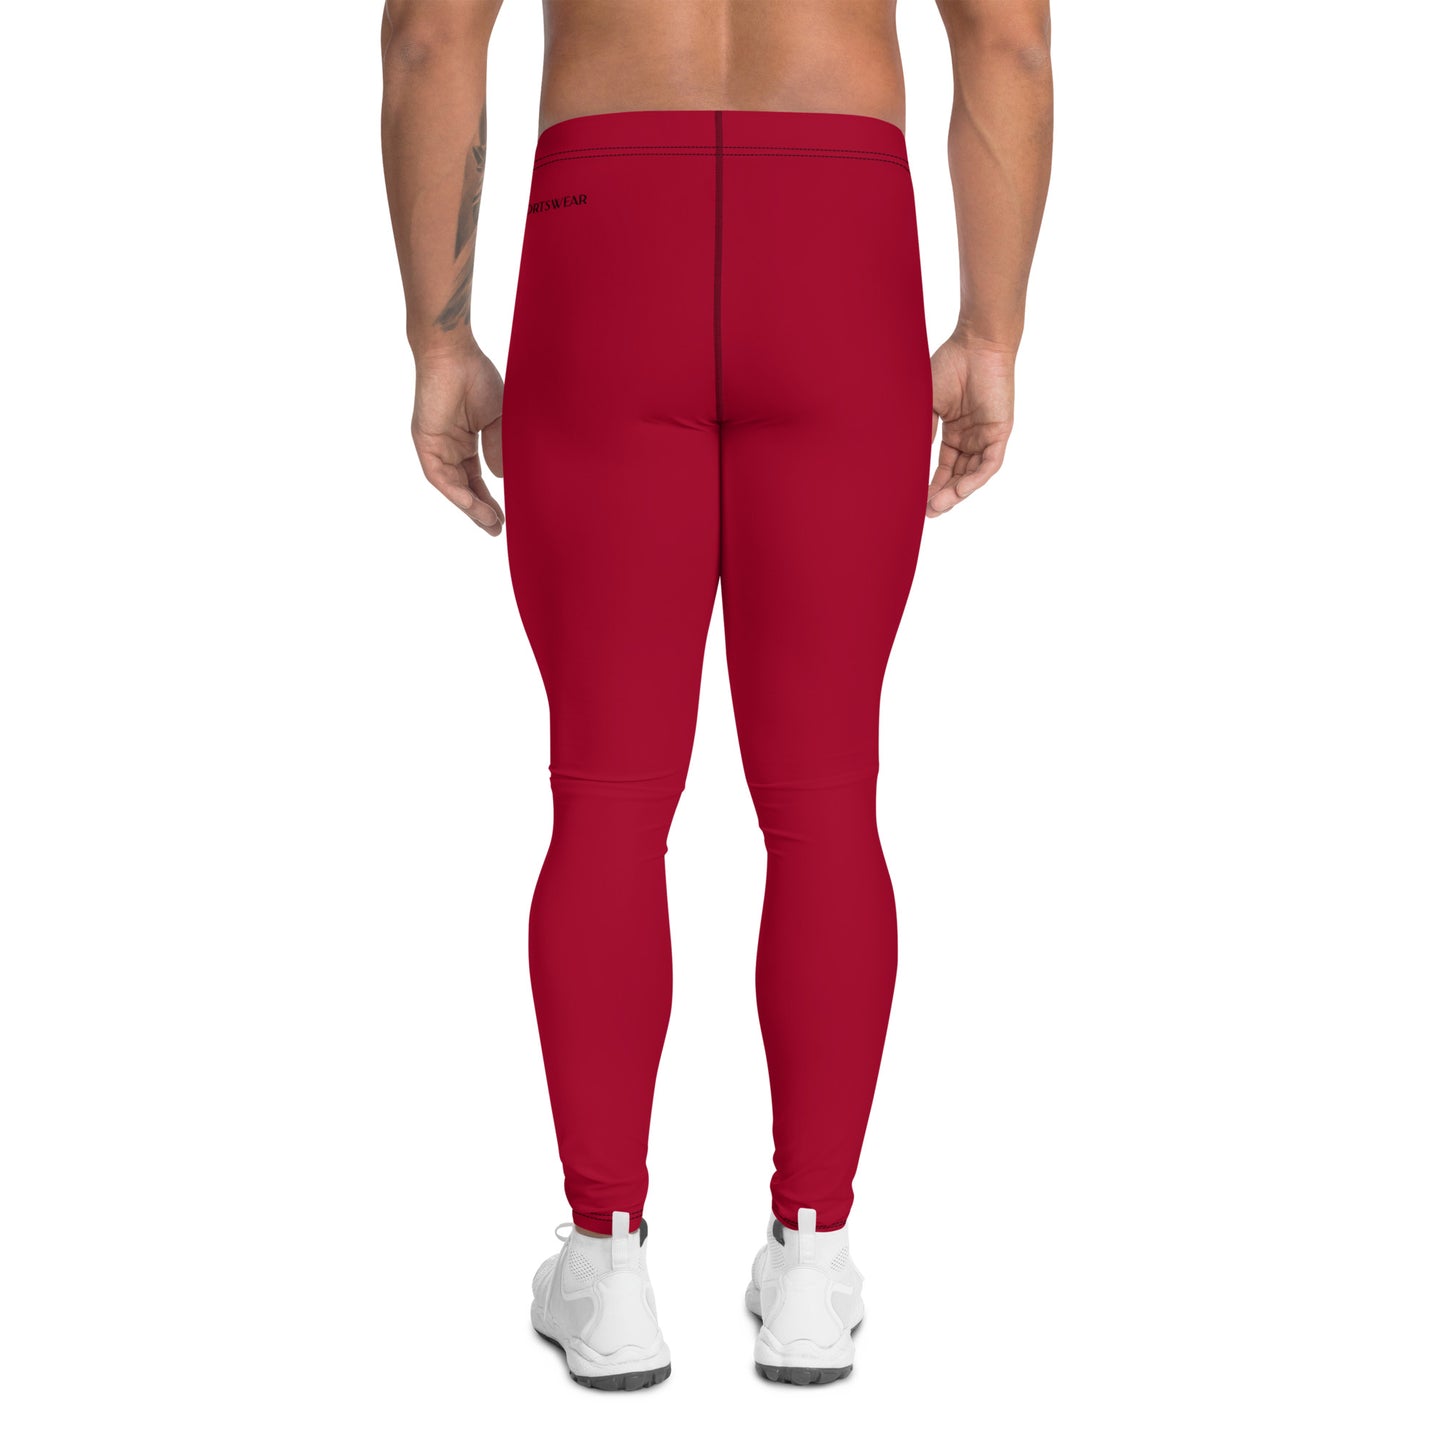 Humble Sportswear, men's color match active wear leggings red 